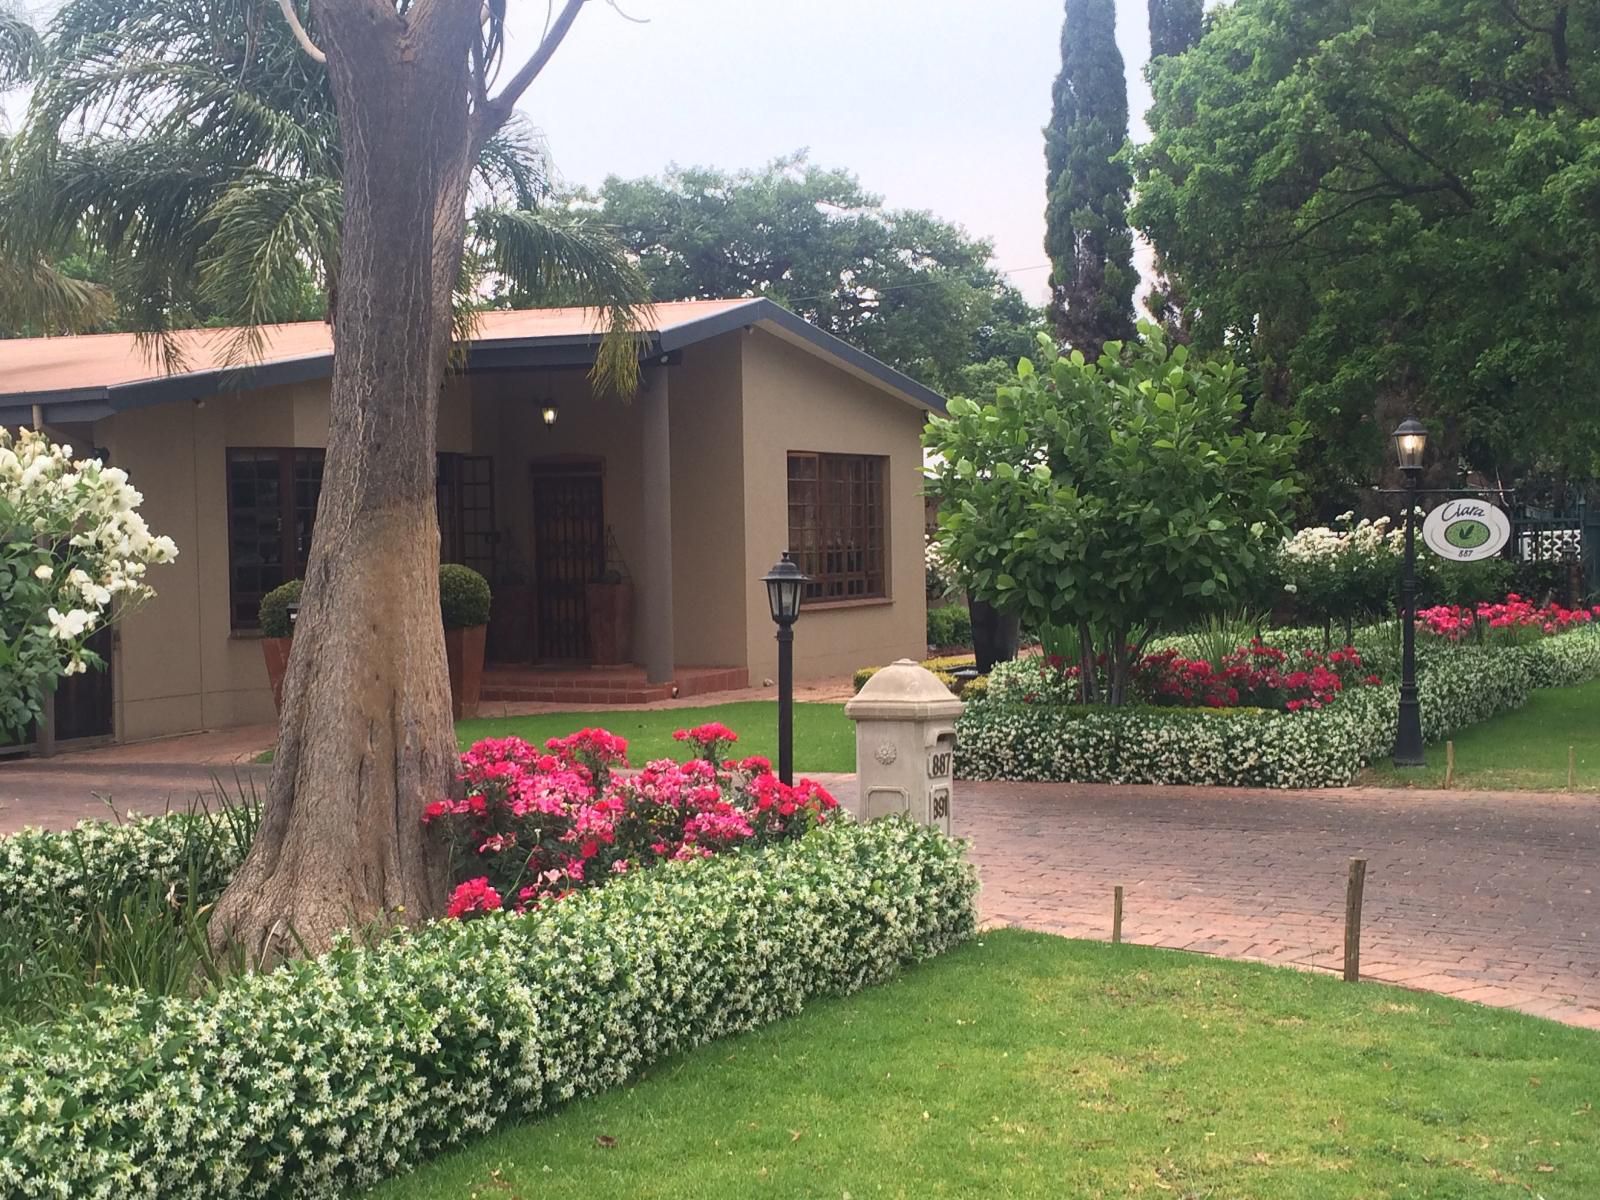 Ciara Lodge Rietfontein Pretoria Tshwane Gauteng South Africa House, Building, Architecture, Palm Tree, Plant, Nature, Wood